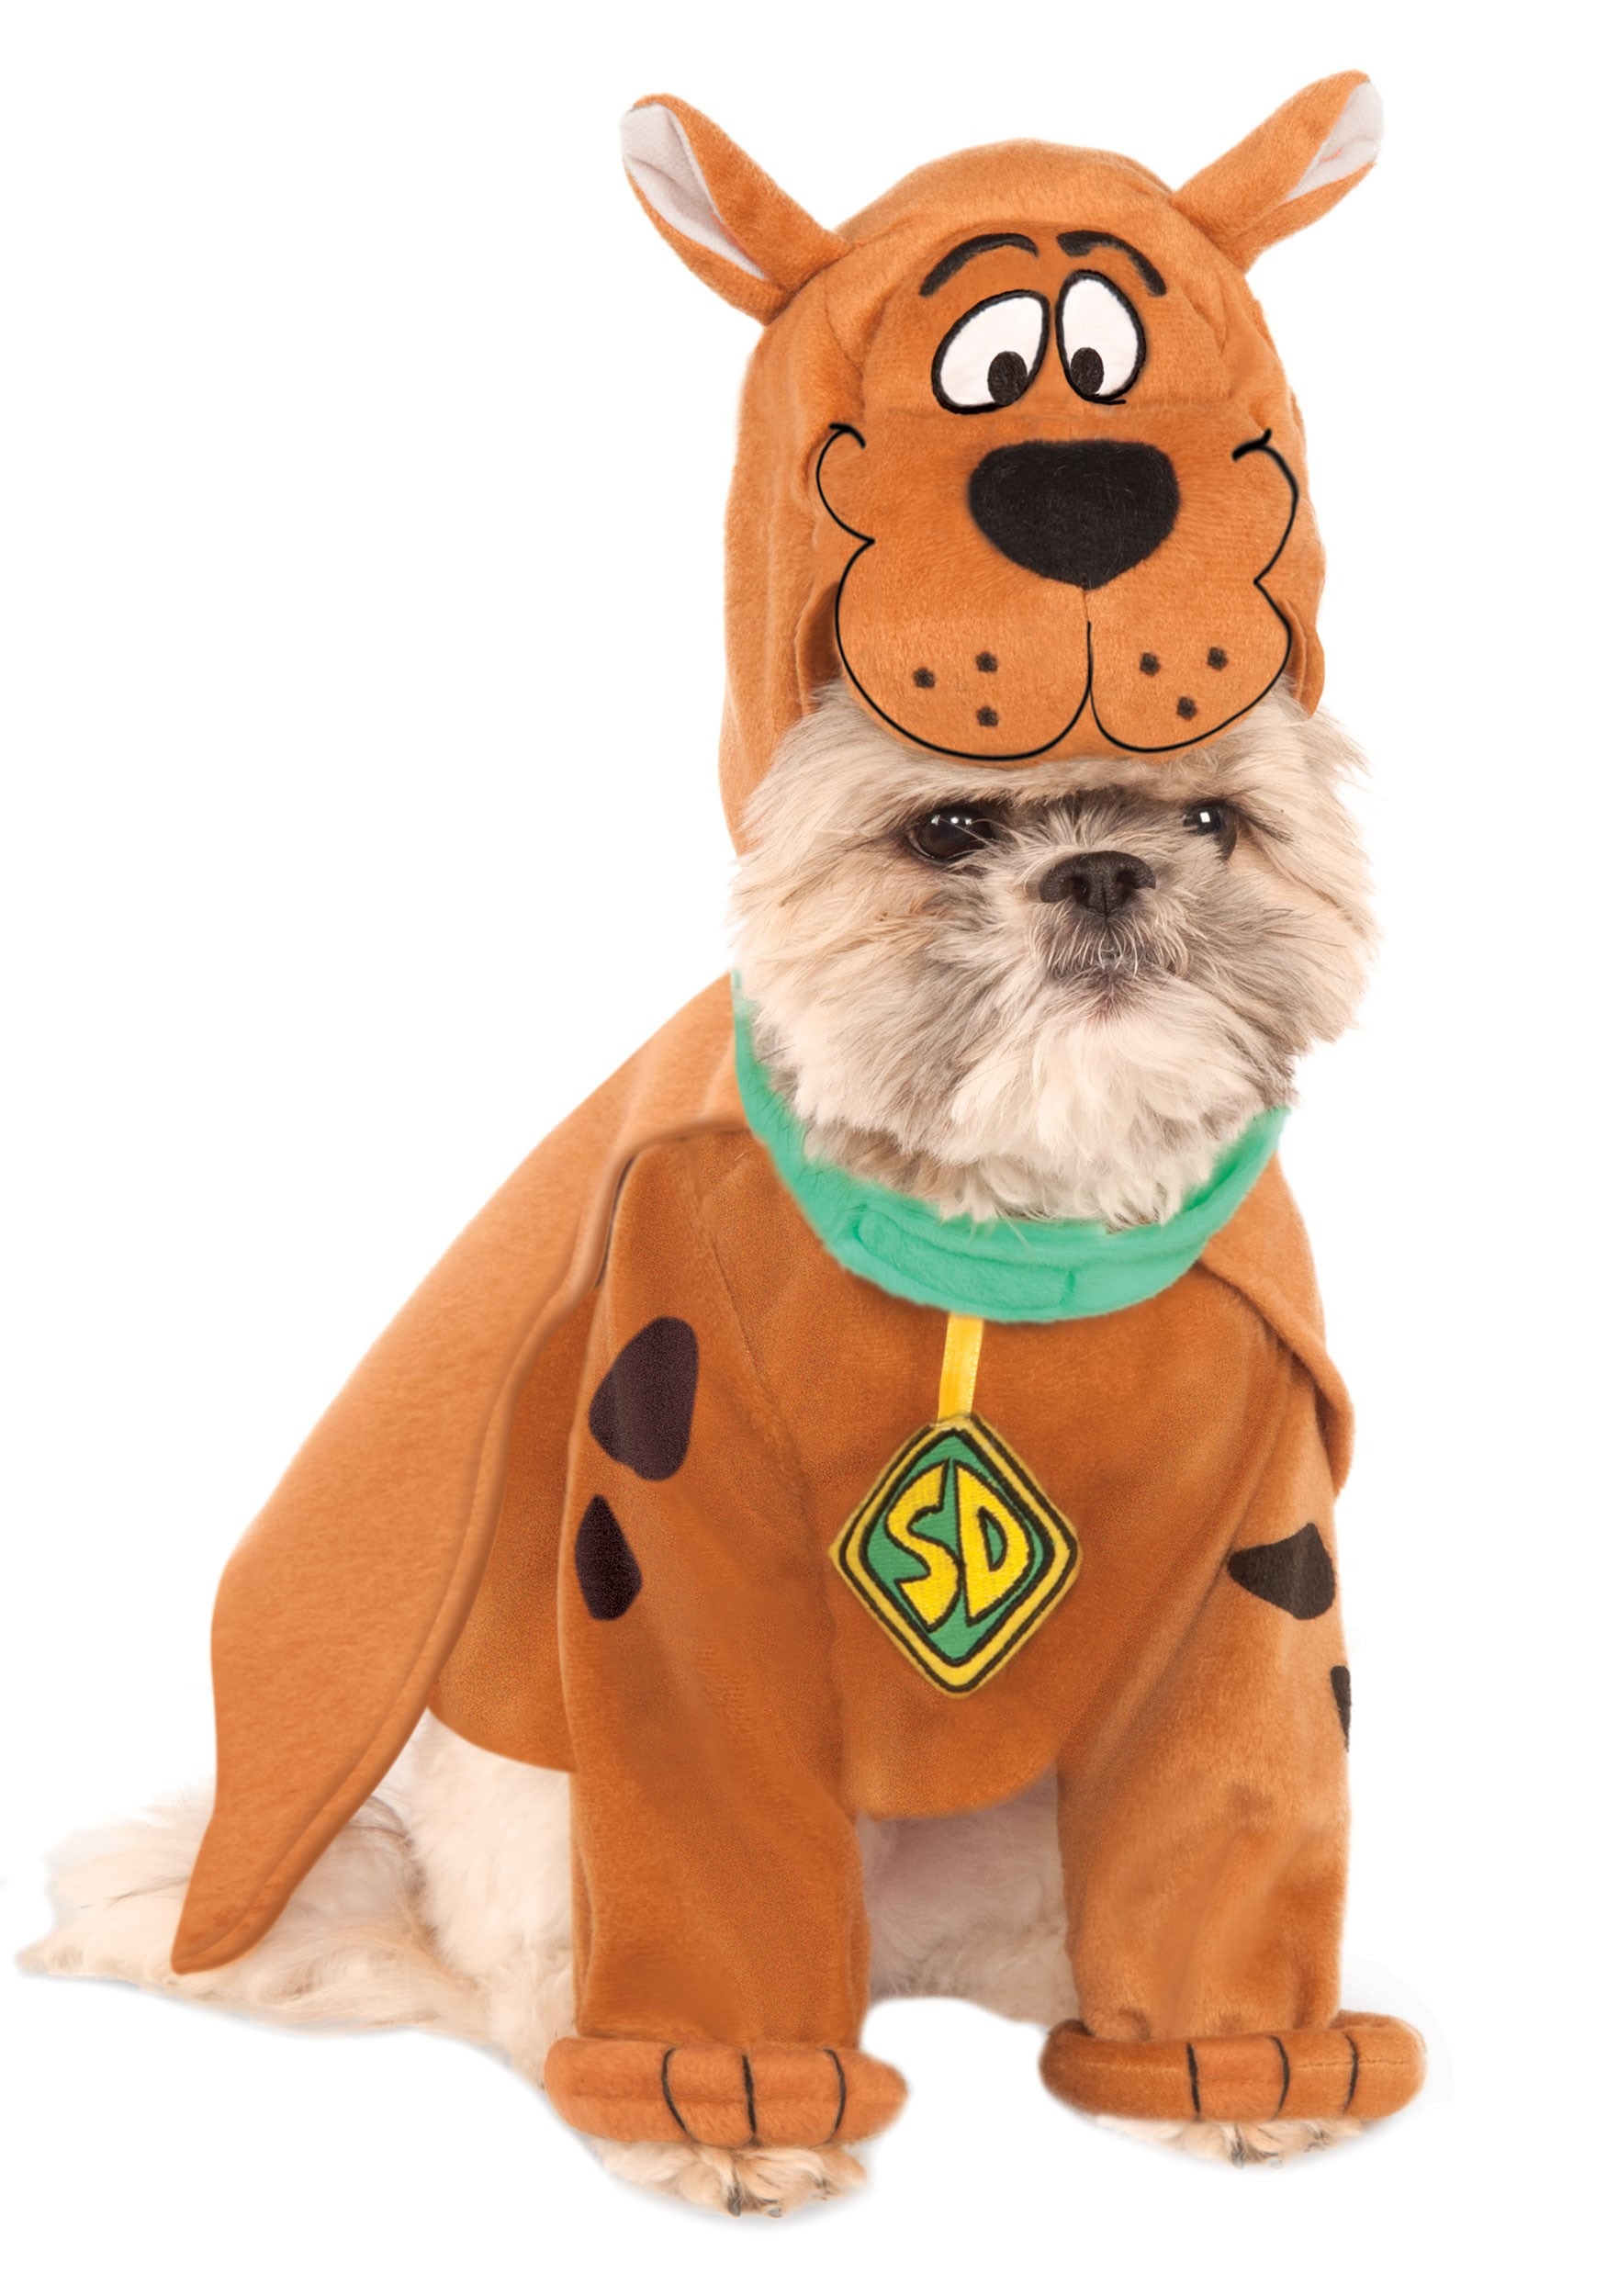 Scooby Pet Costume Scooby Doo